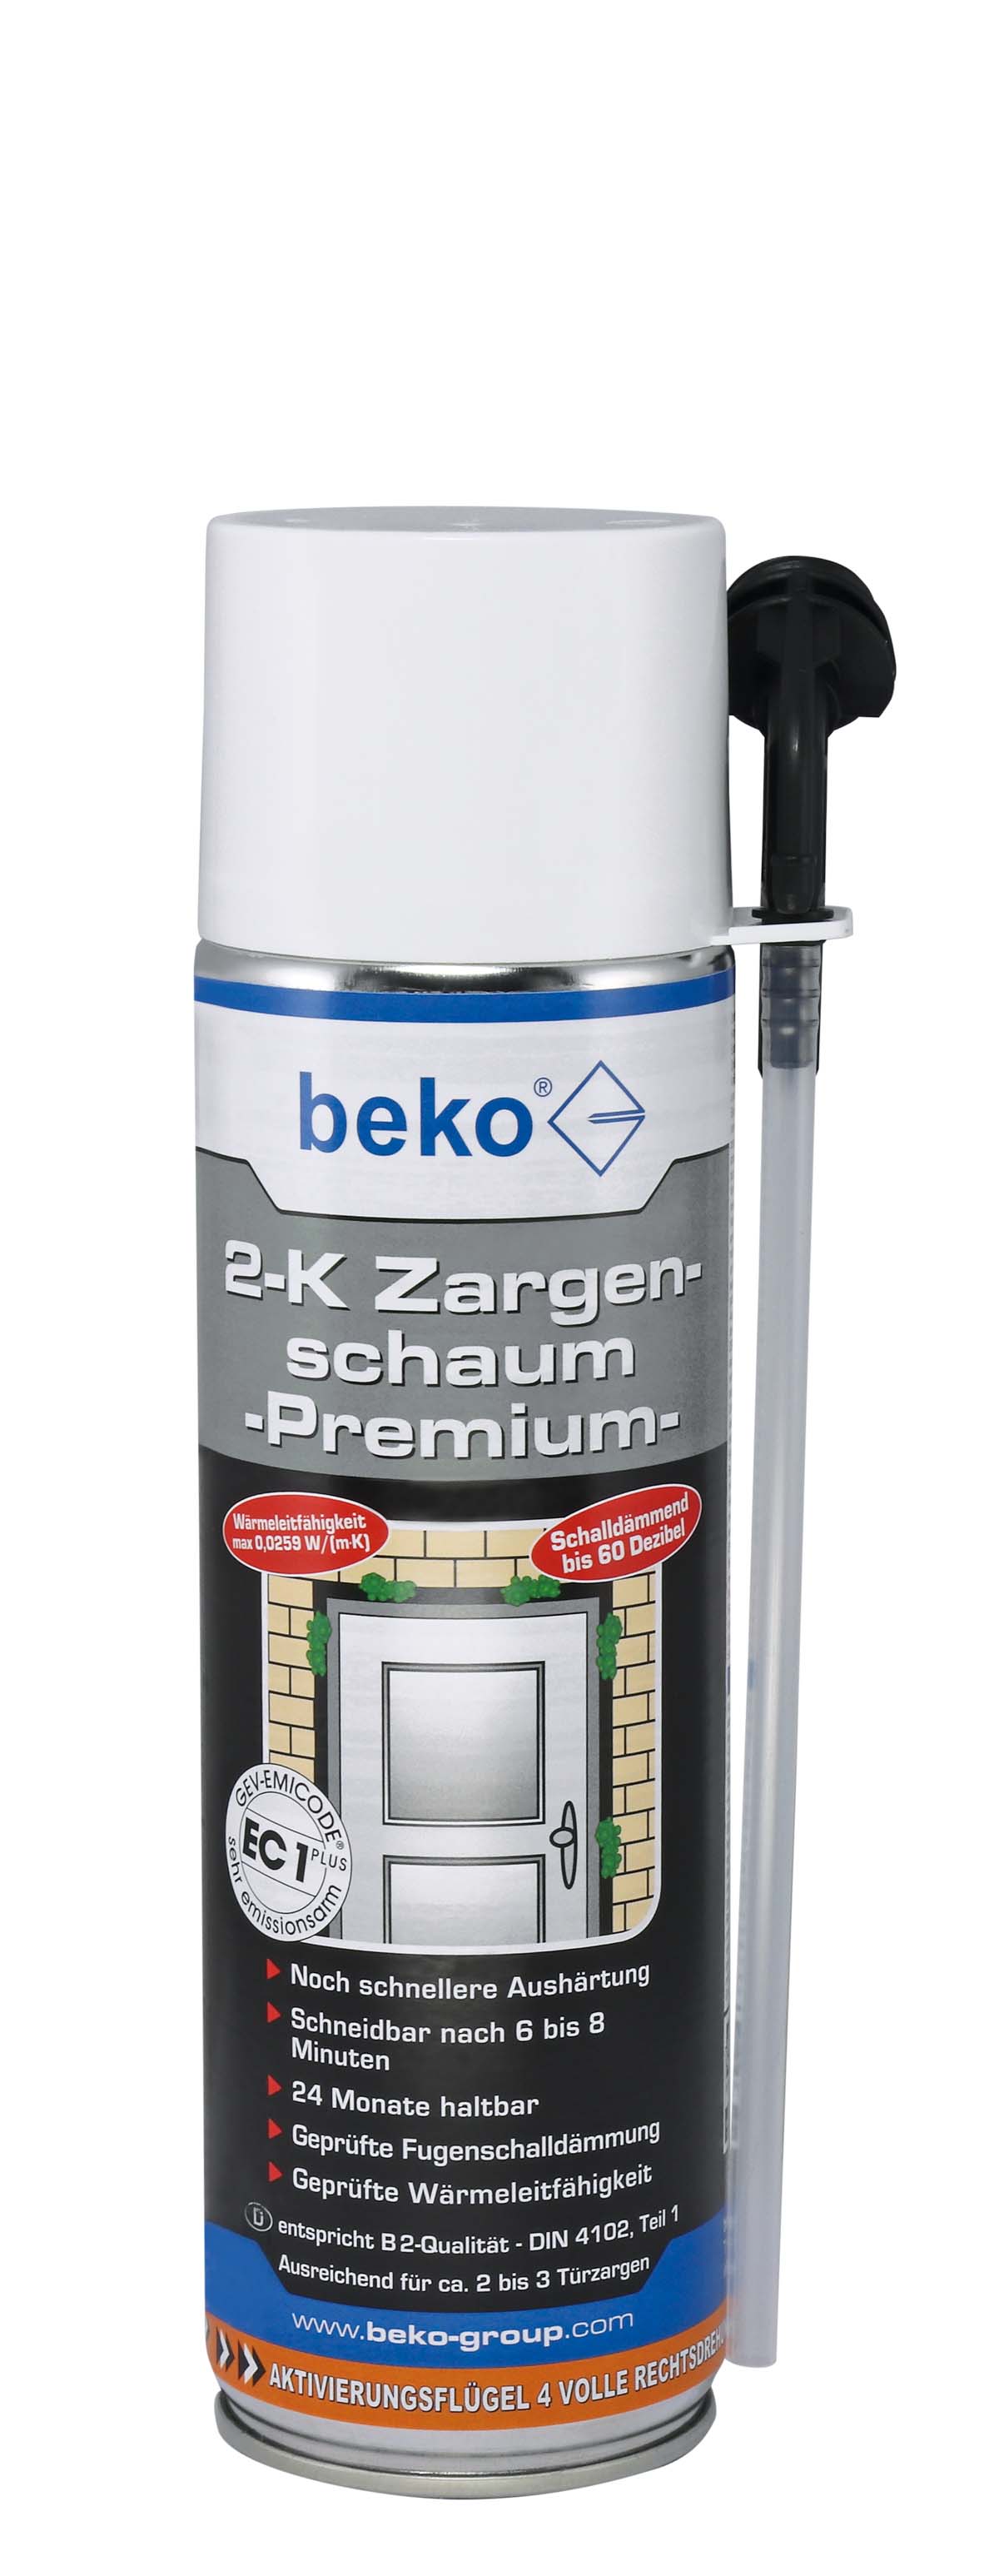 Beko 2-K Zargenschaum Premium